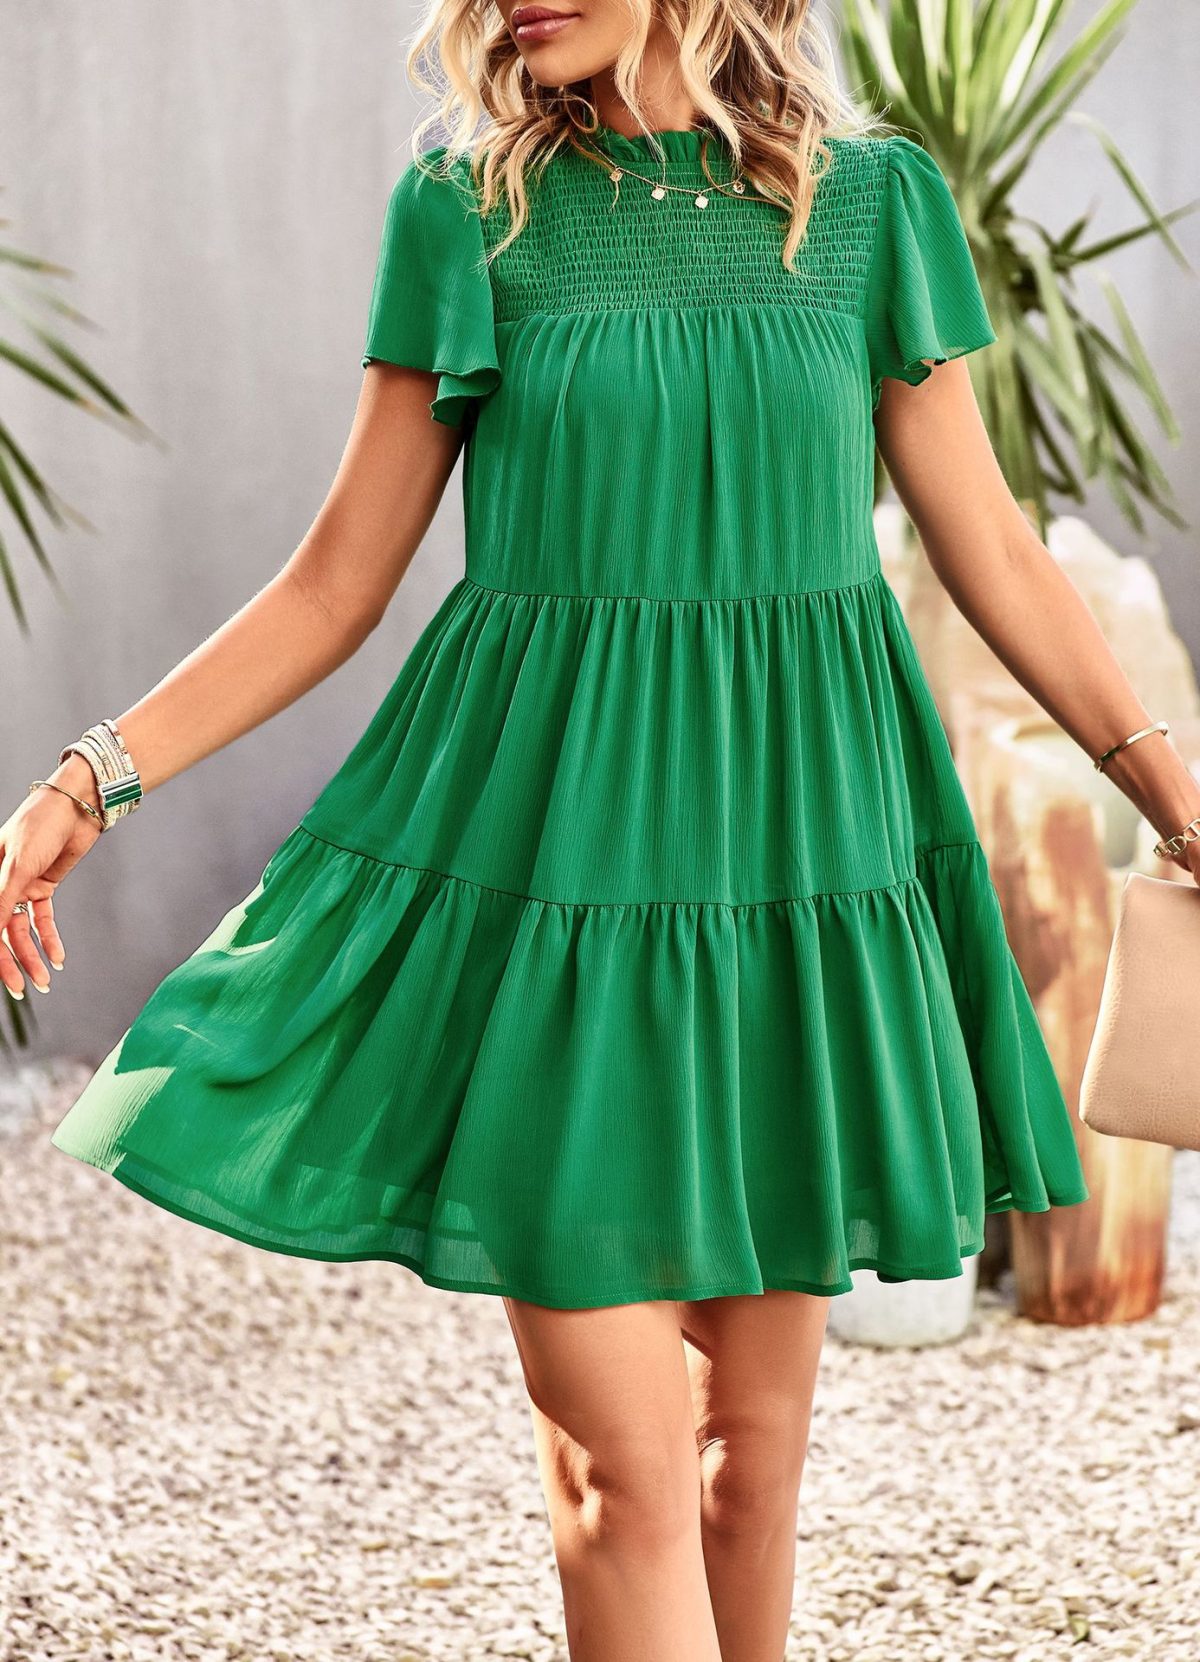 Waist Controlled Slimming Girl Dress - Dresses - Uniqistic.com